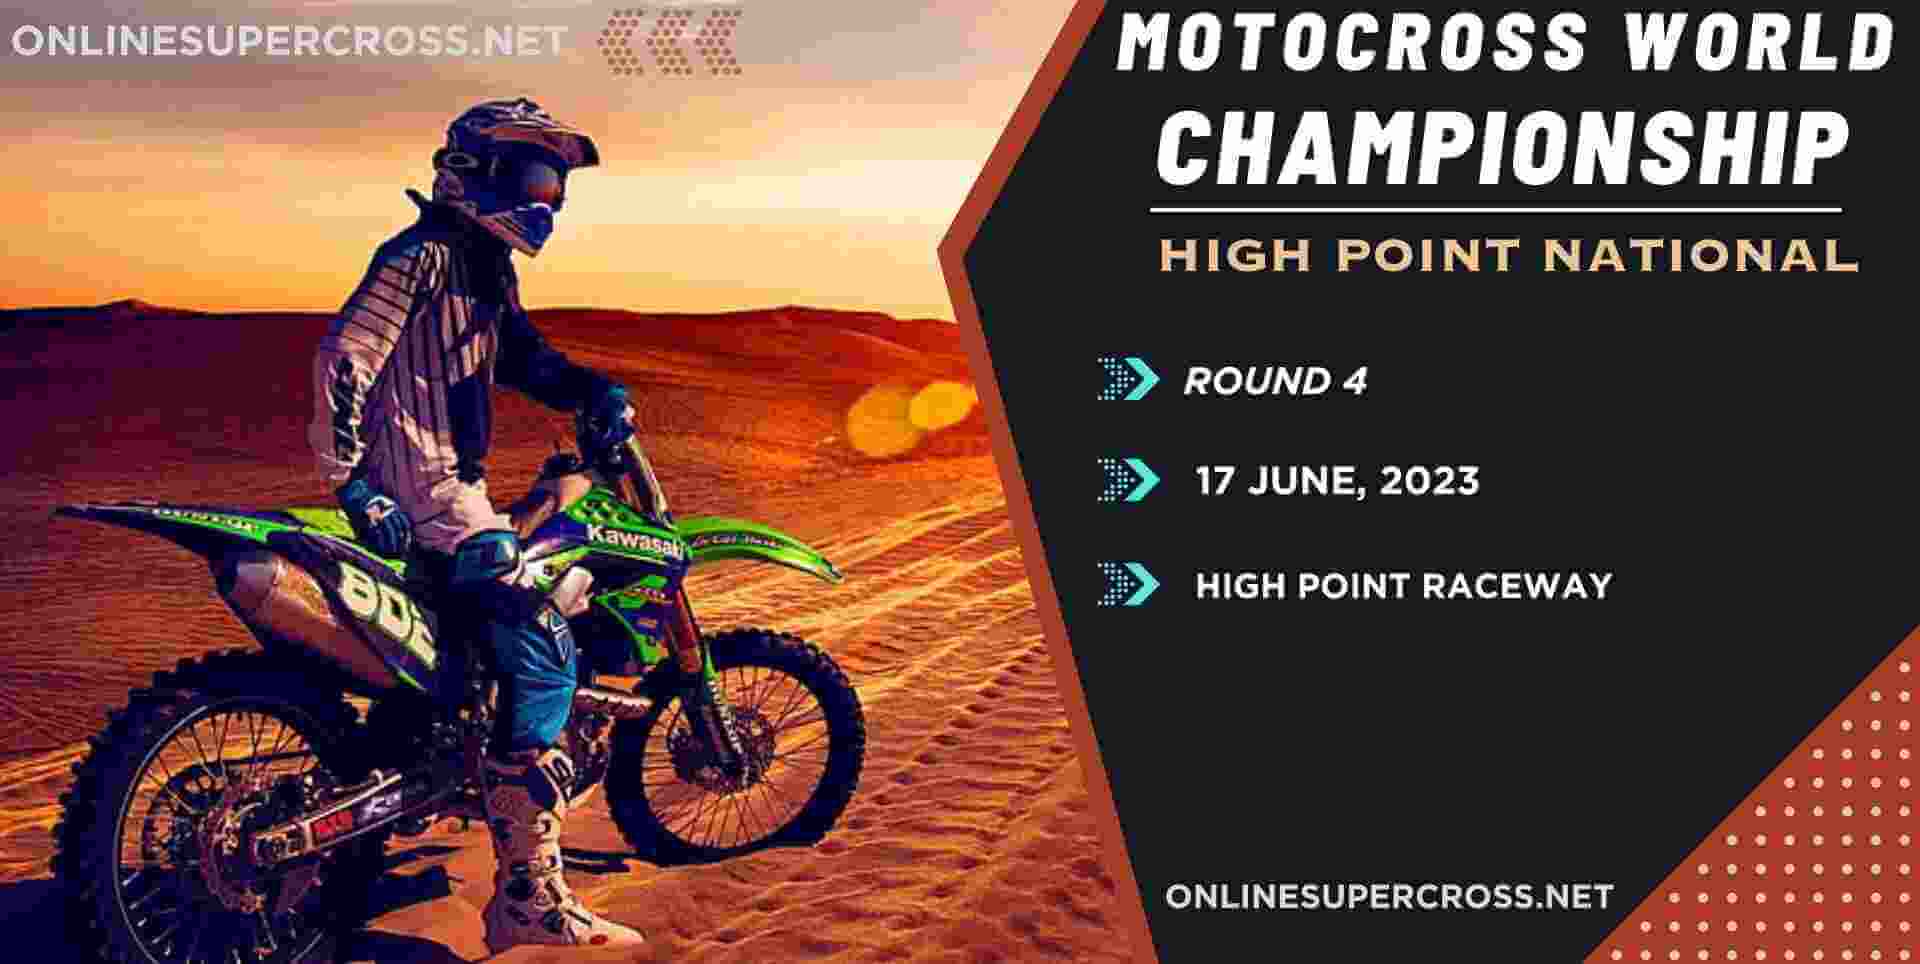 High Point National Live Stream Pro Motocross 2023